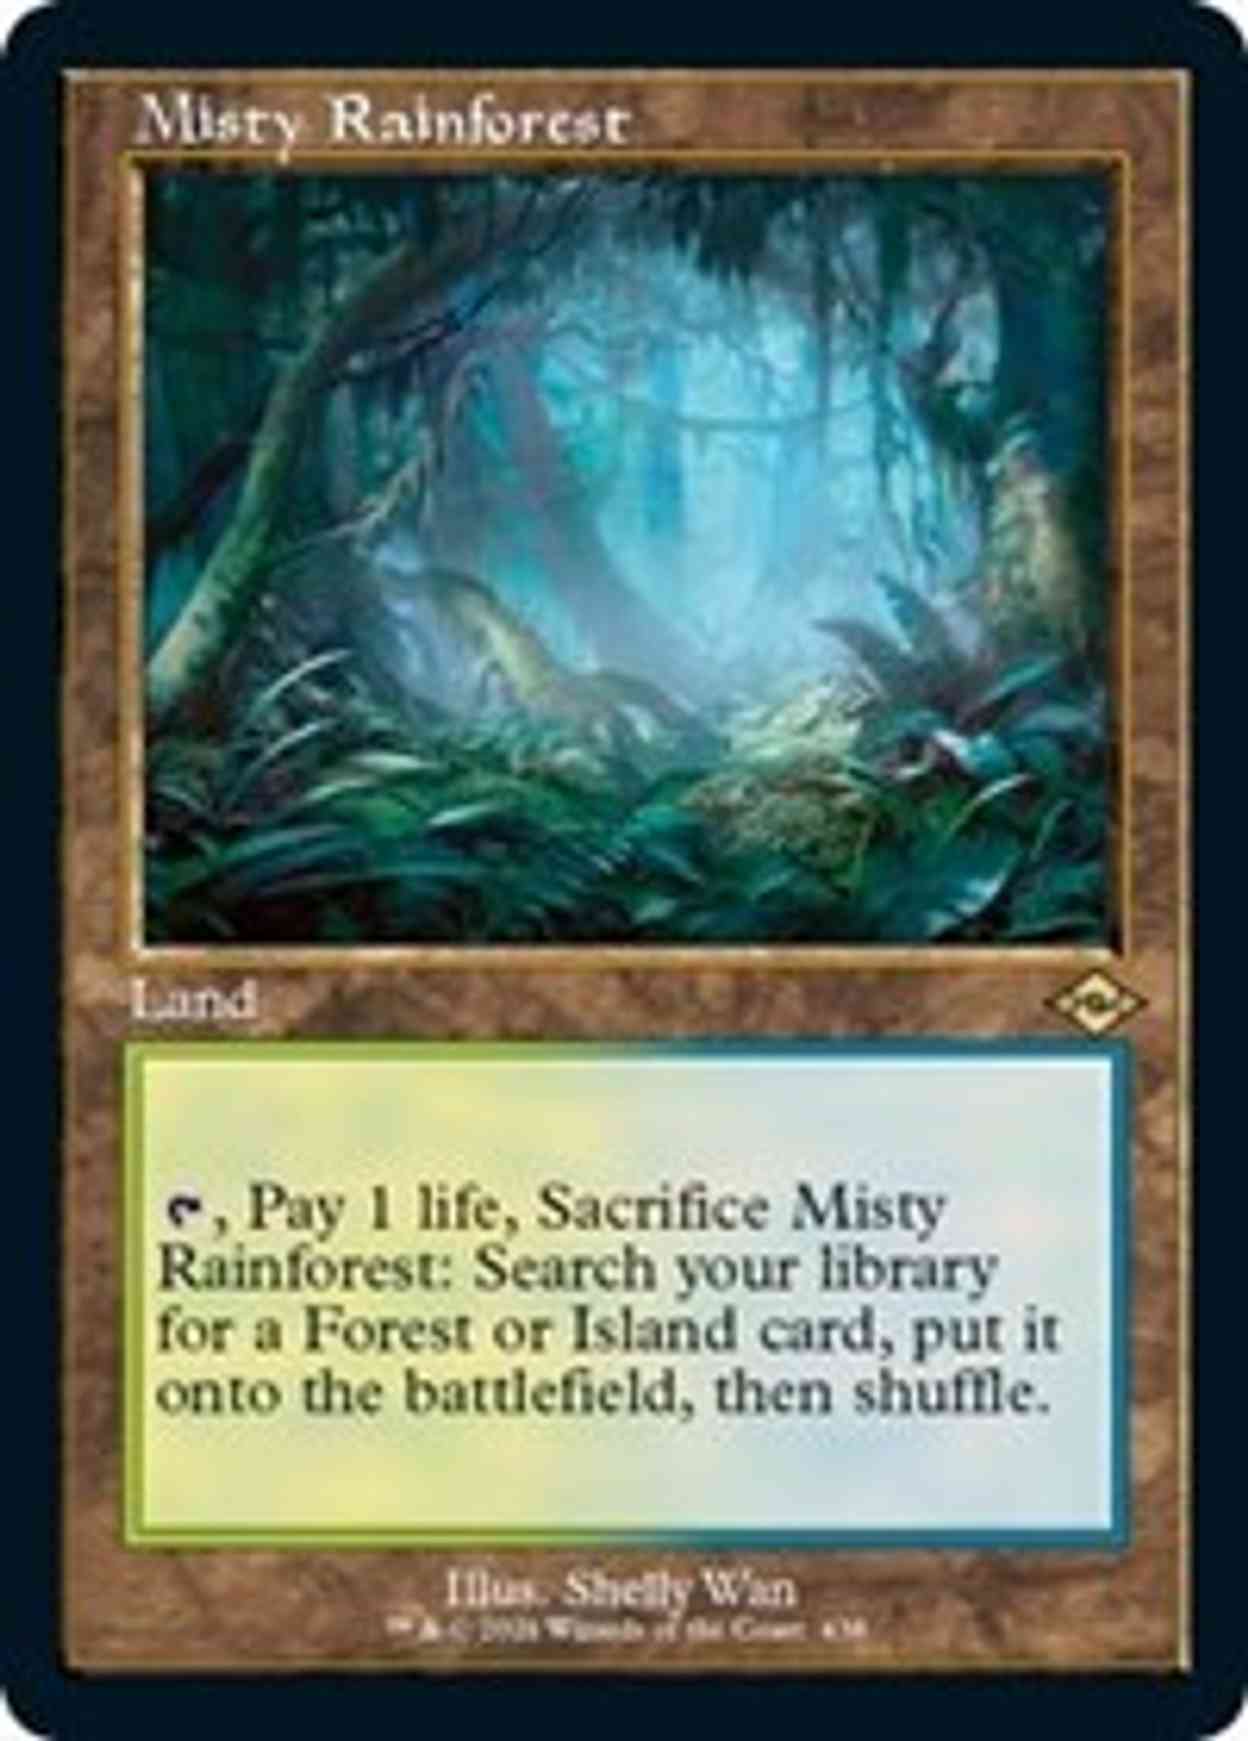 Misty Rainforest (Retro Frame) (Foil Etched) magic card front